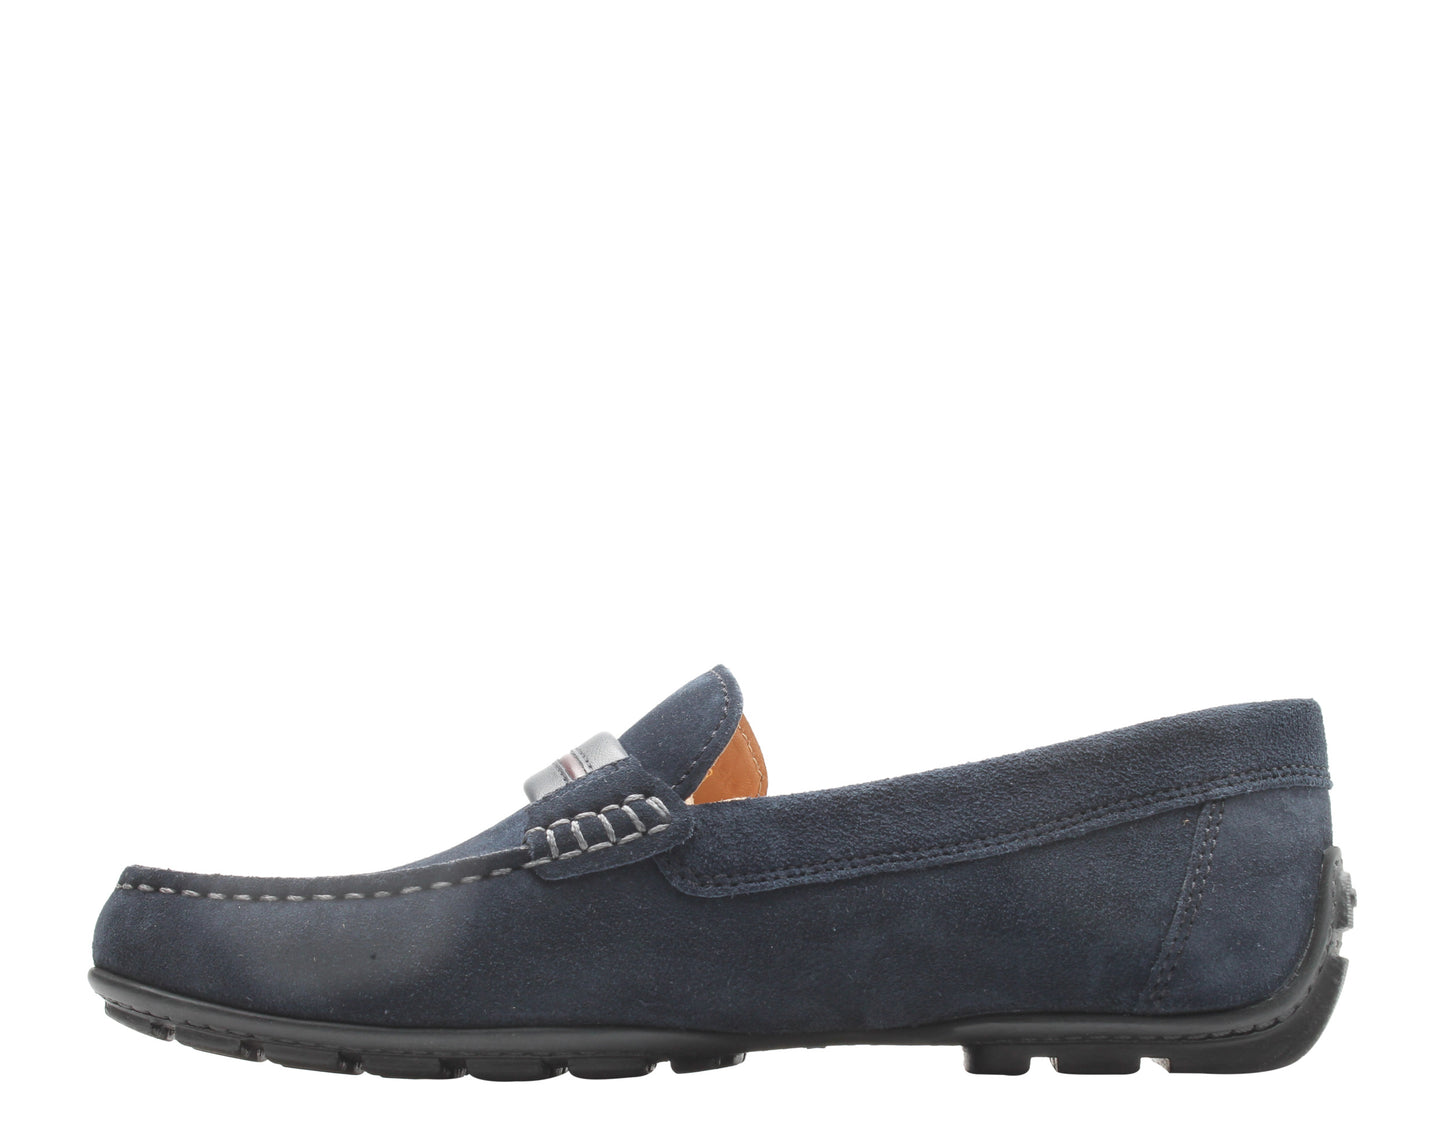 Geox Moner Mocassin Loafer Men's Casual Shoes